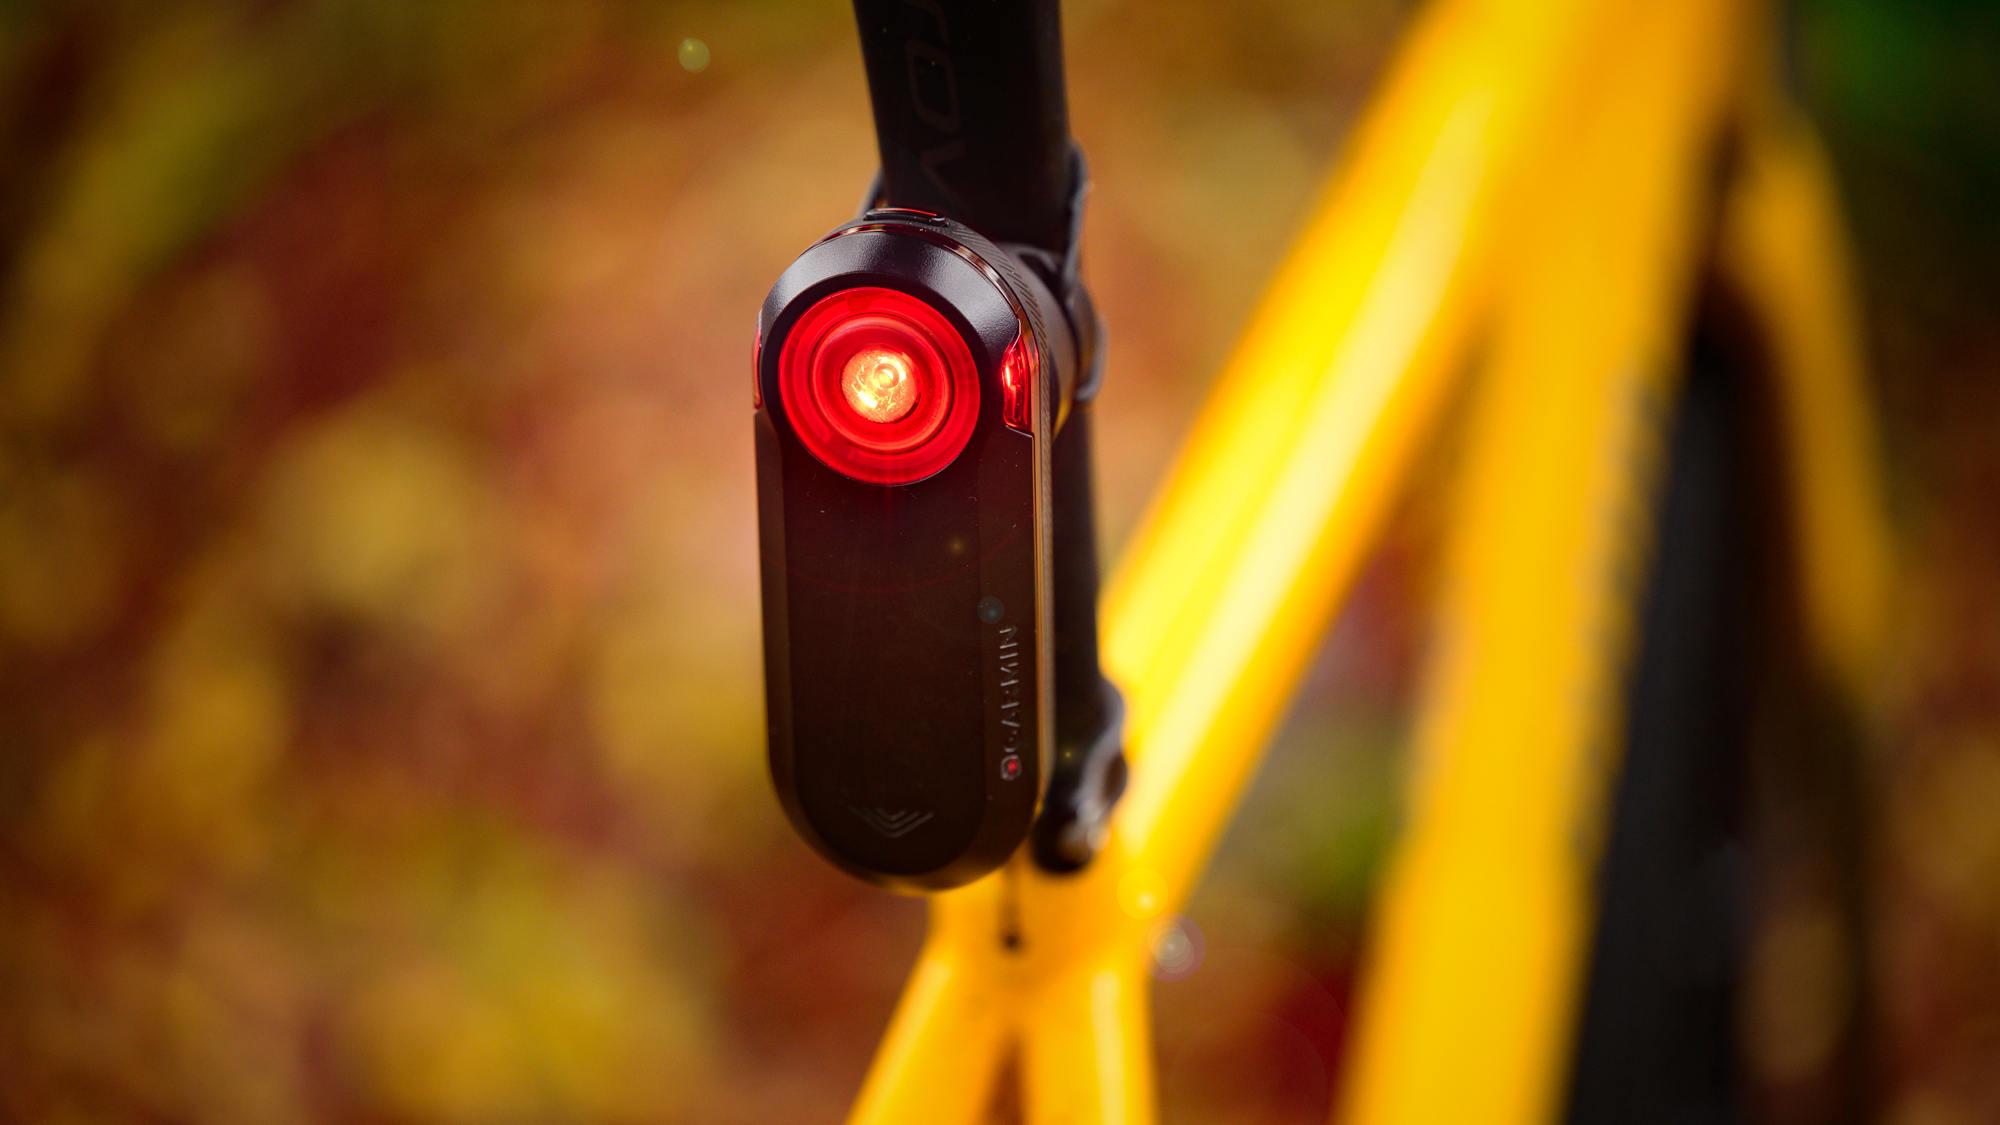 Garmin's Varia RCT715 adds camera to bike radar system